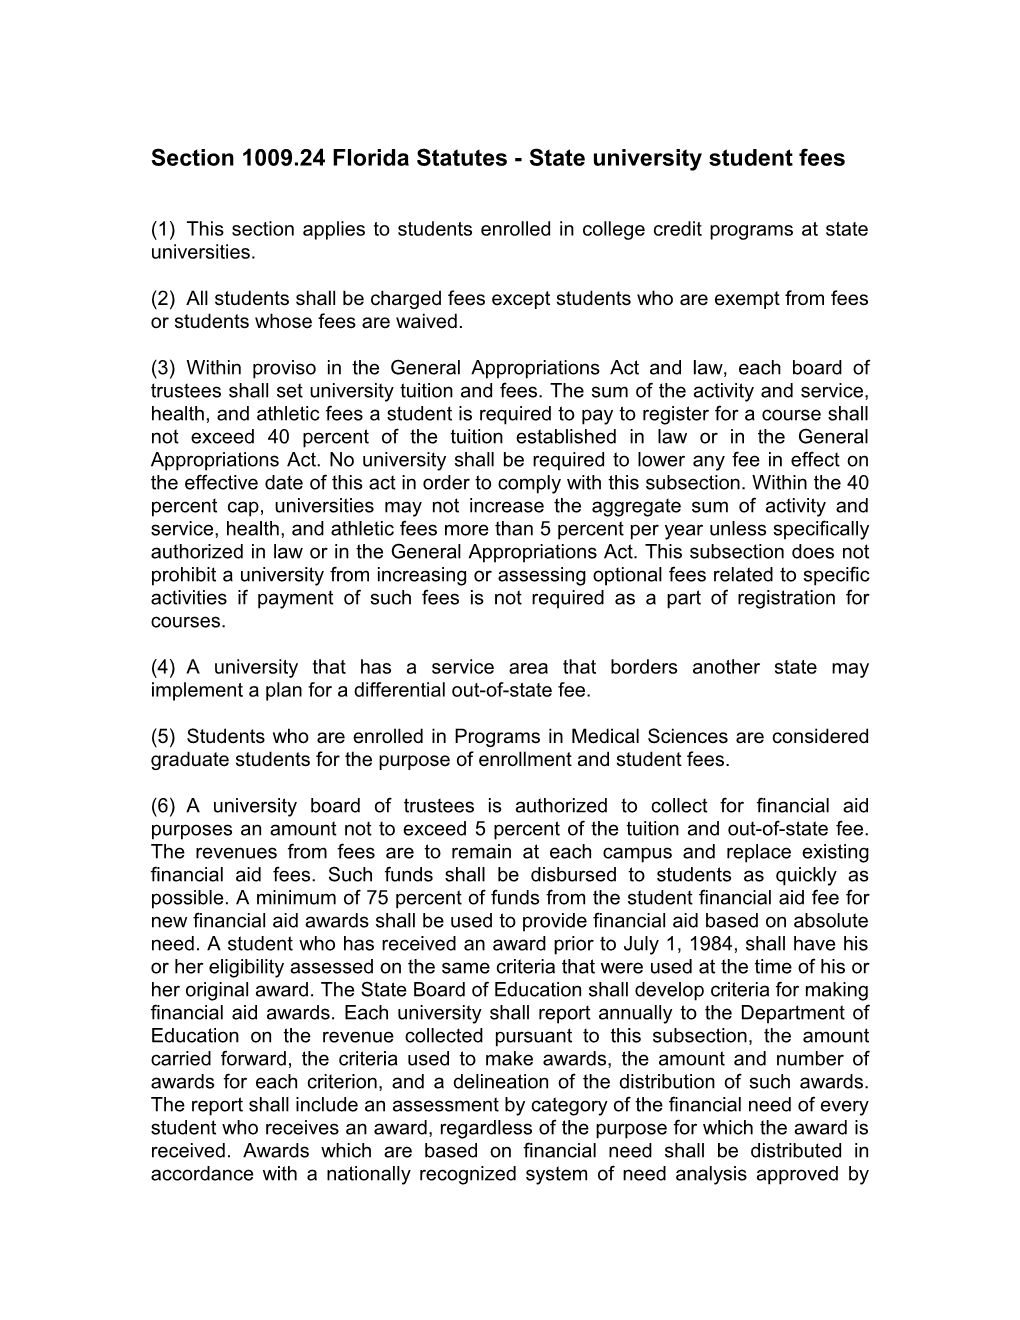 Section 1009.24 Florida Statutes - State University Student Fees